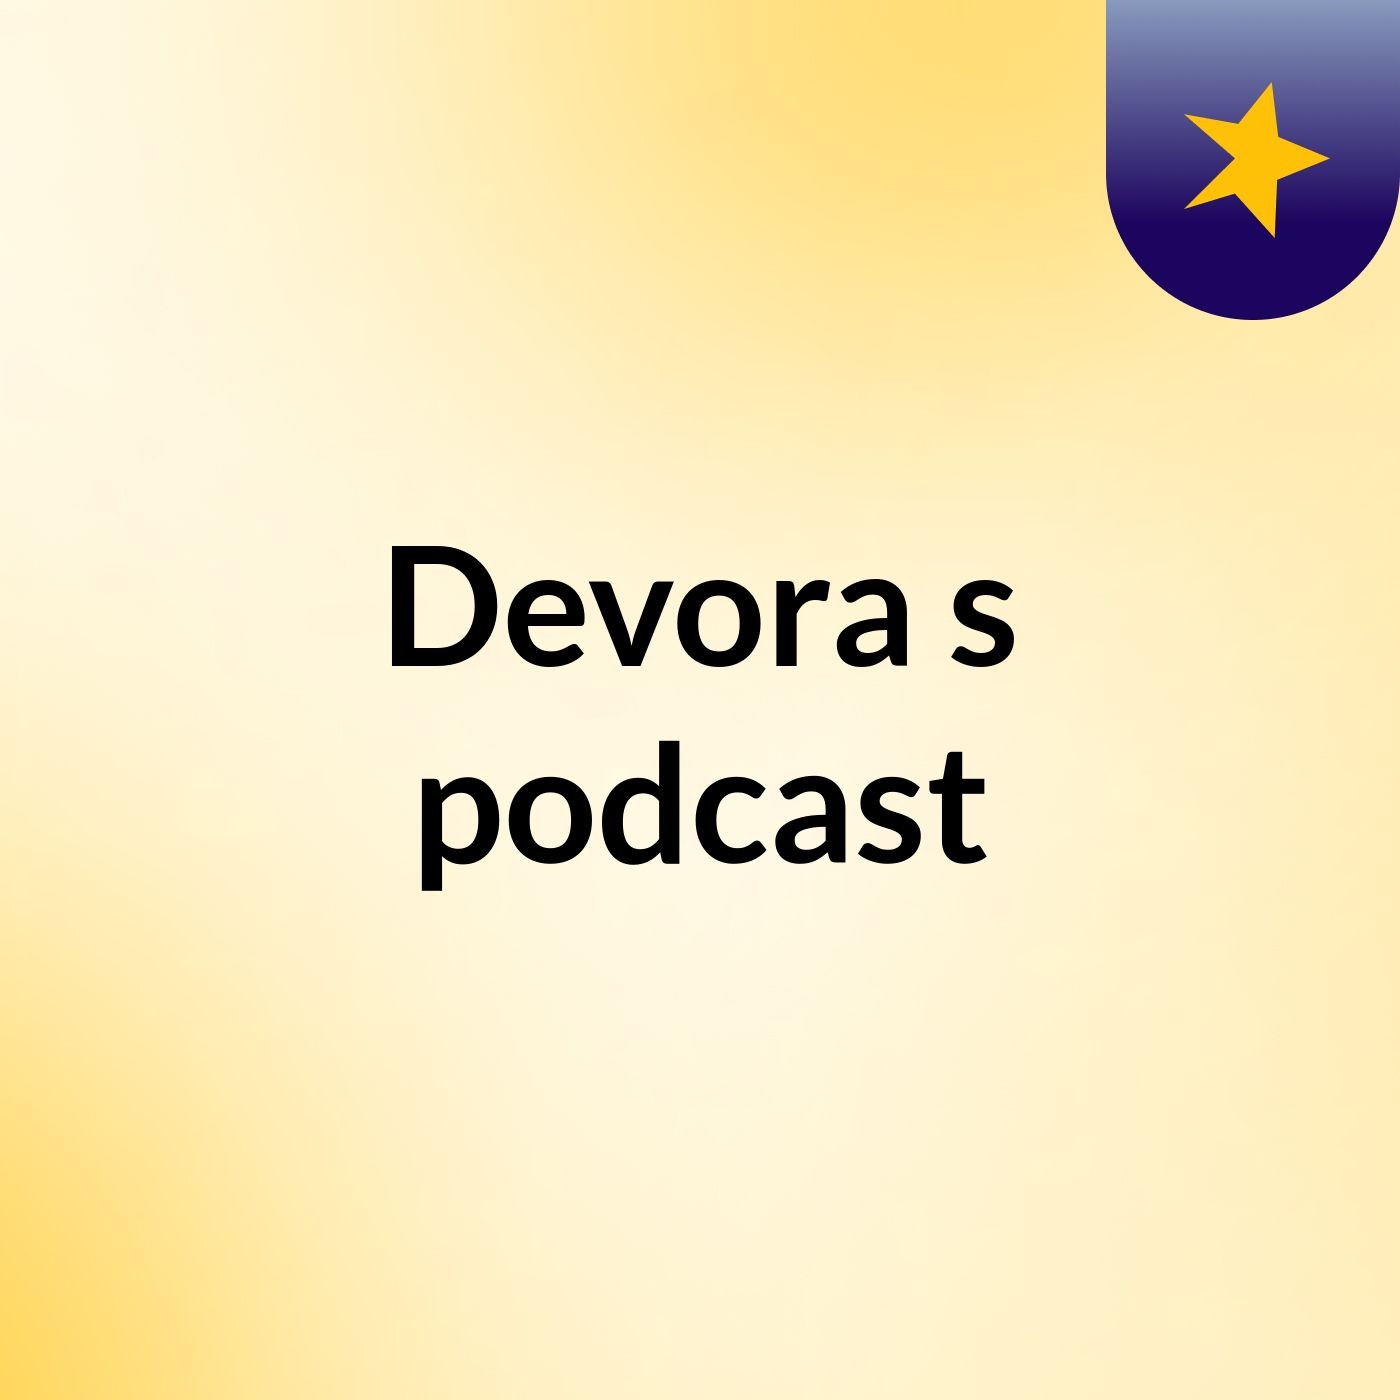 Episode 4 - Devora's podcast